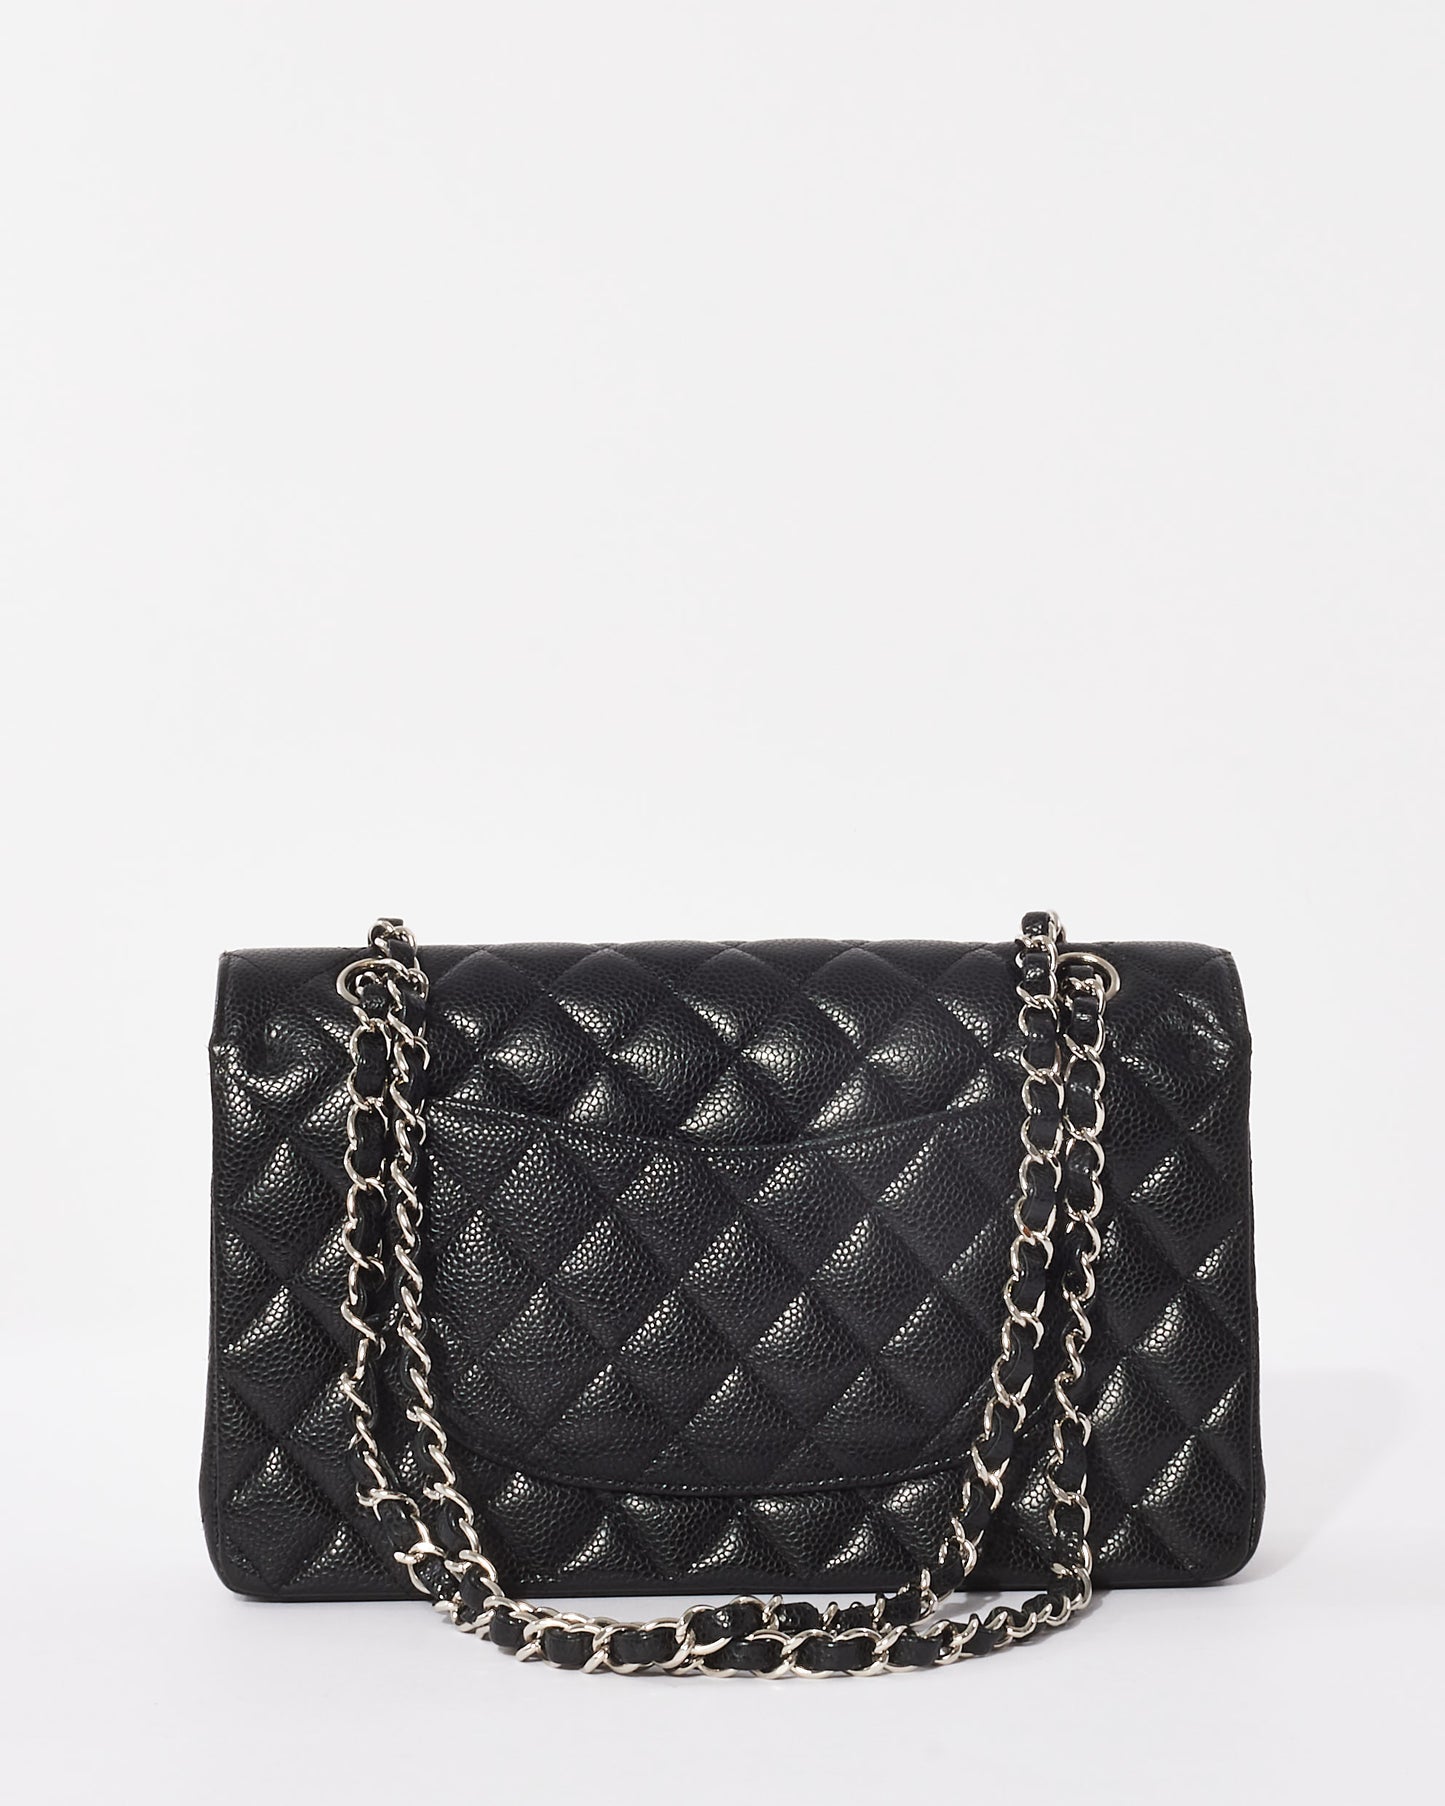 Chanel Black Caviar Leather Classic Medium Double Flap Bag SHW